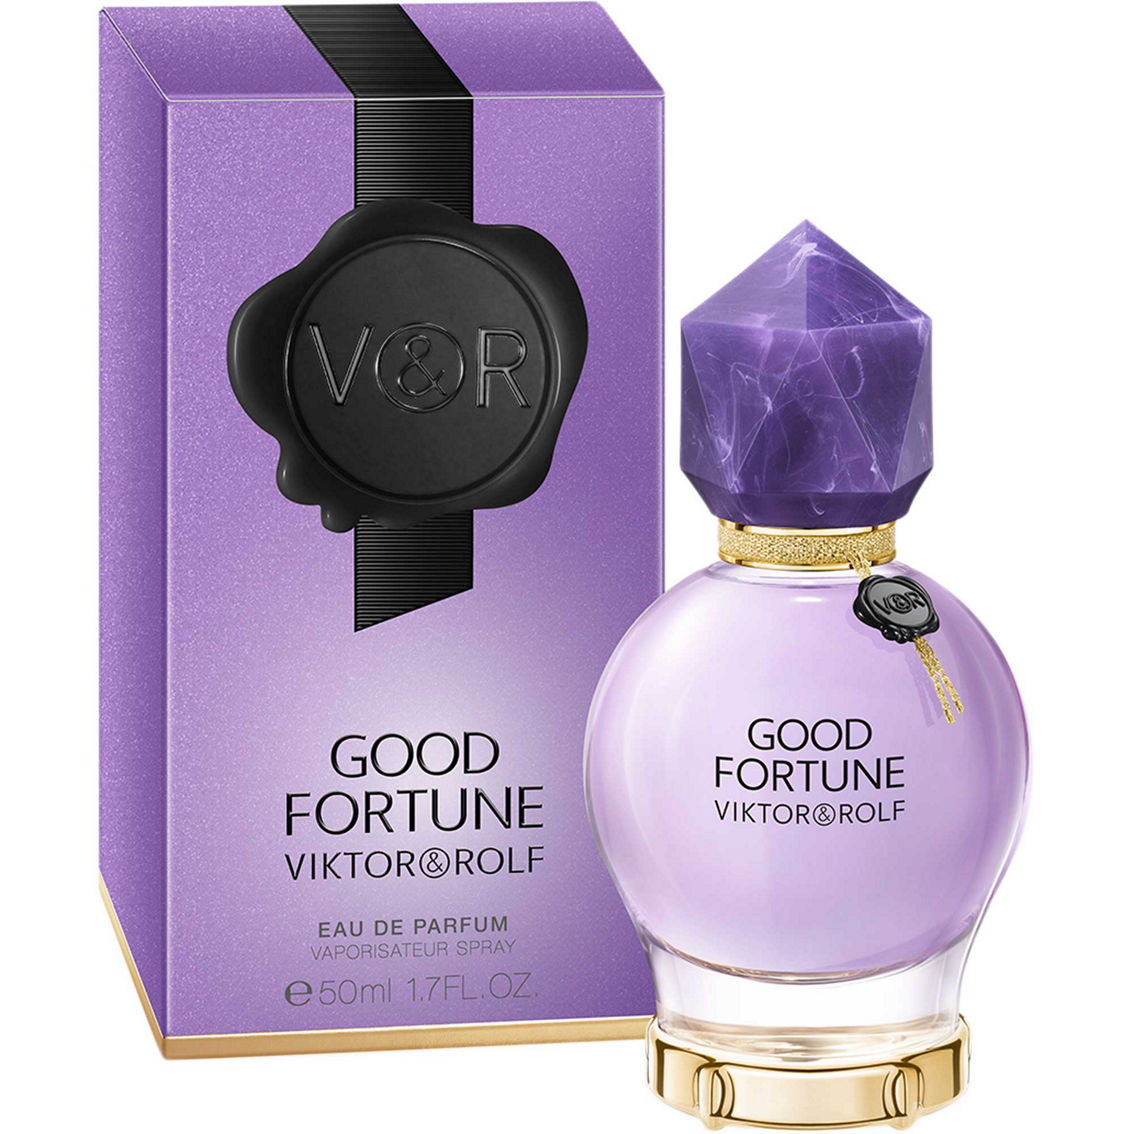 Viktor & Rolf Good Fortune Eau de Parfum Spray - Image 2 of 6